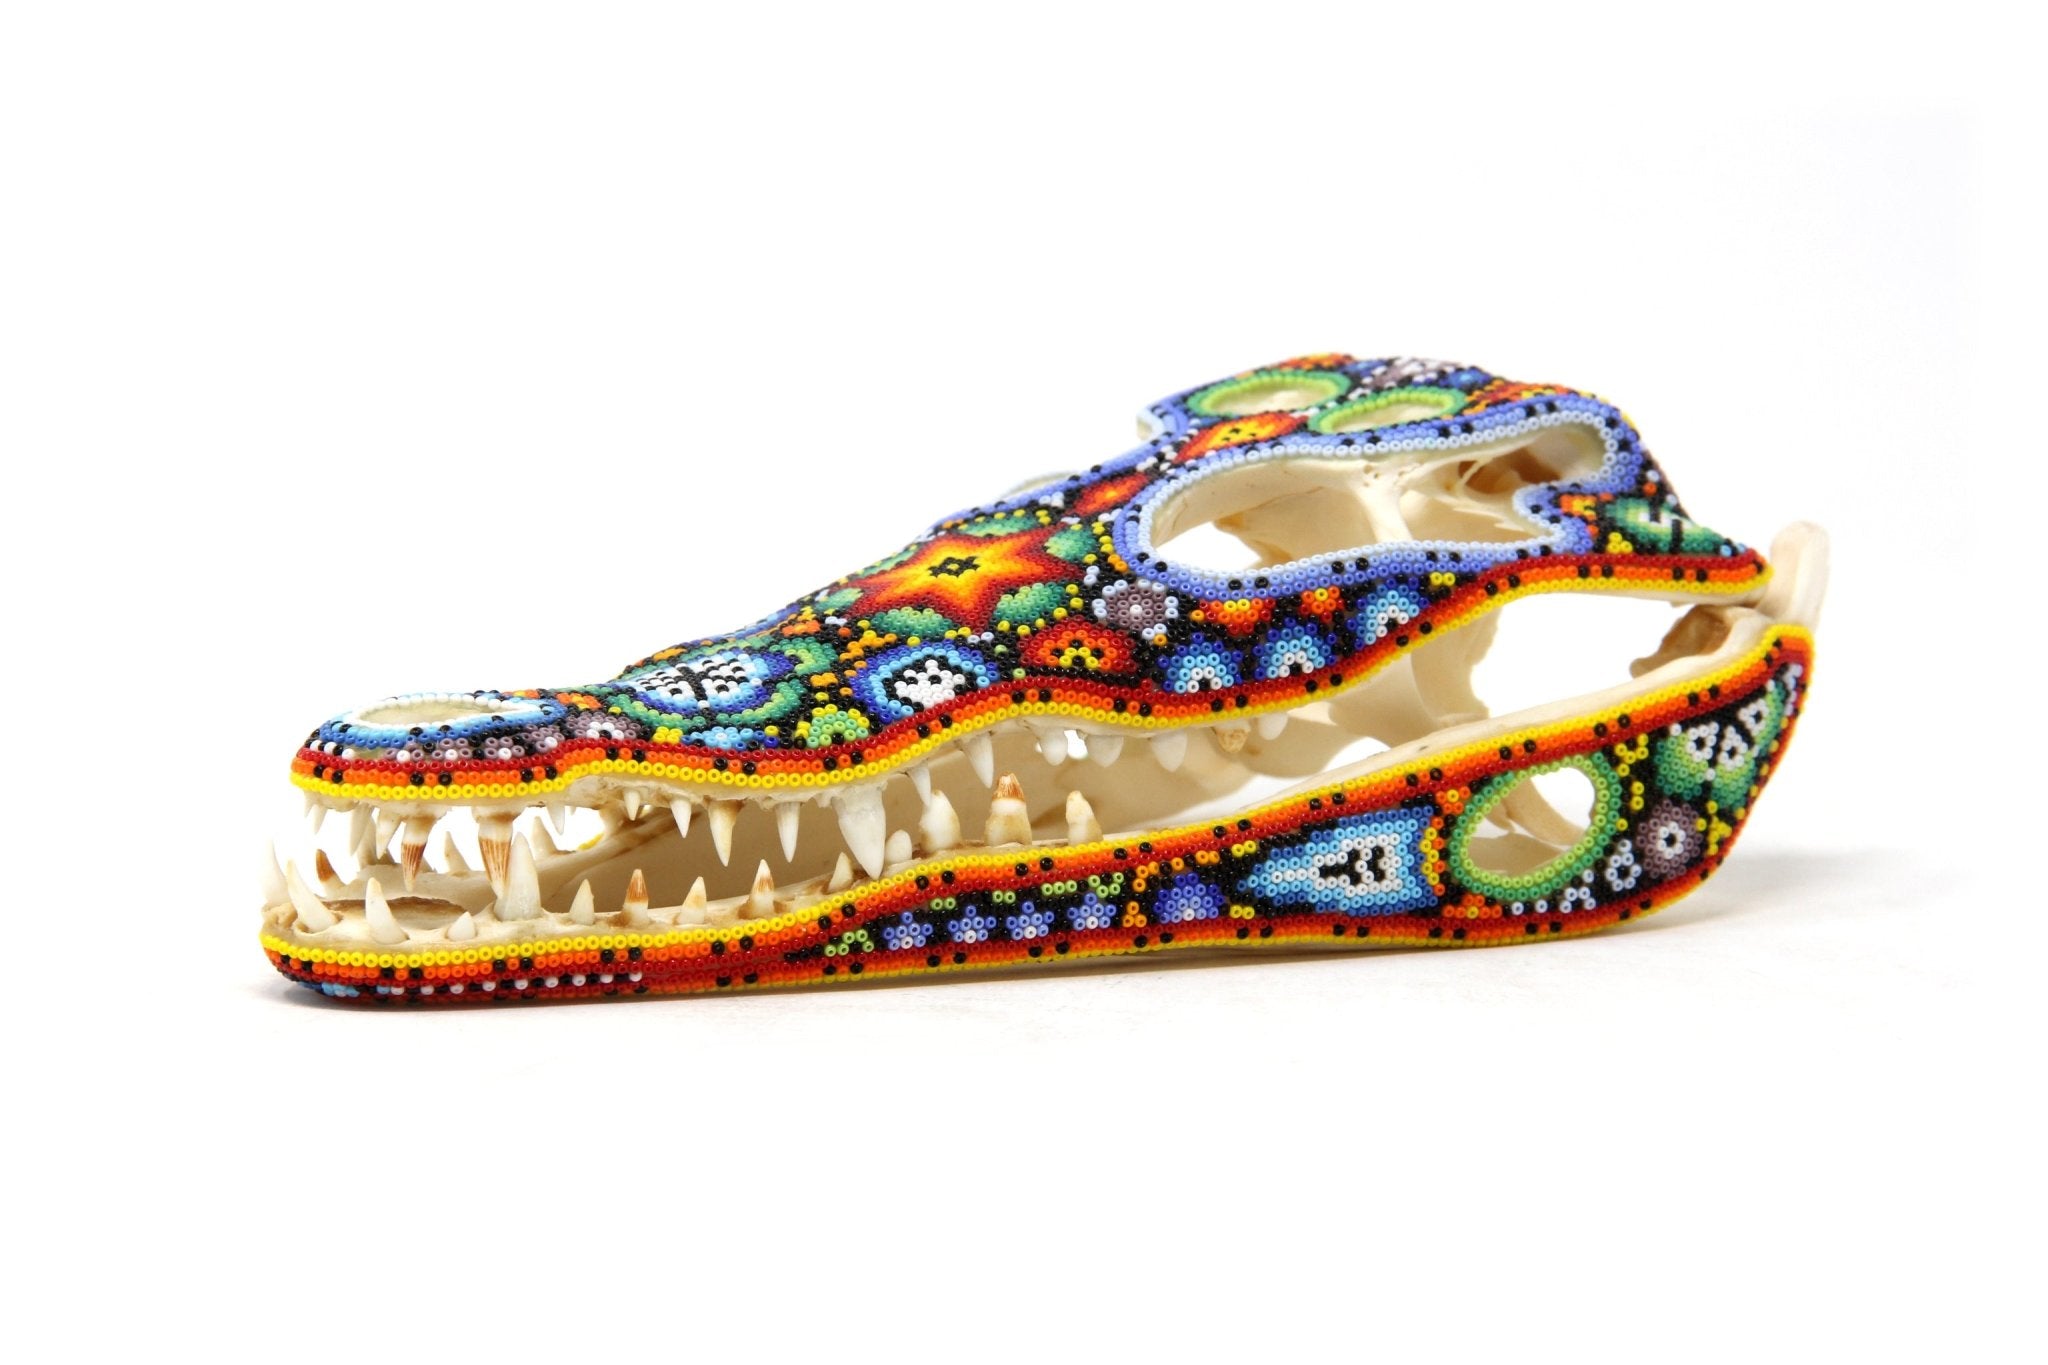 Crâne de crocodile - Yutsi tutuya I - Huichol Art - Marakame